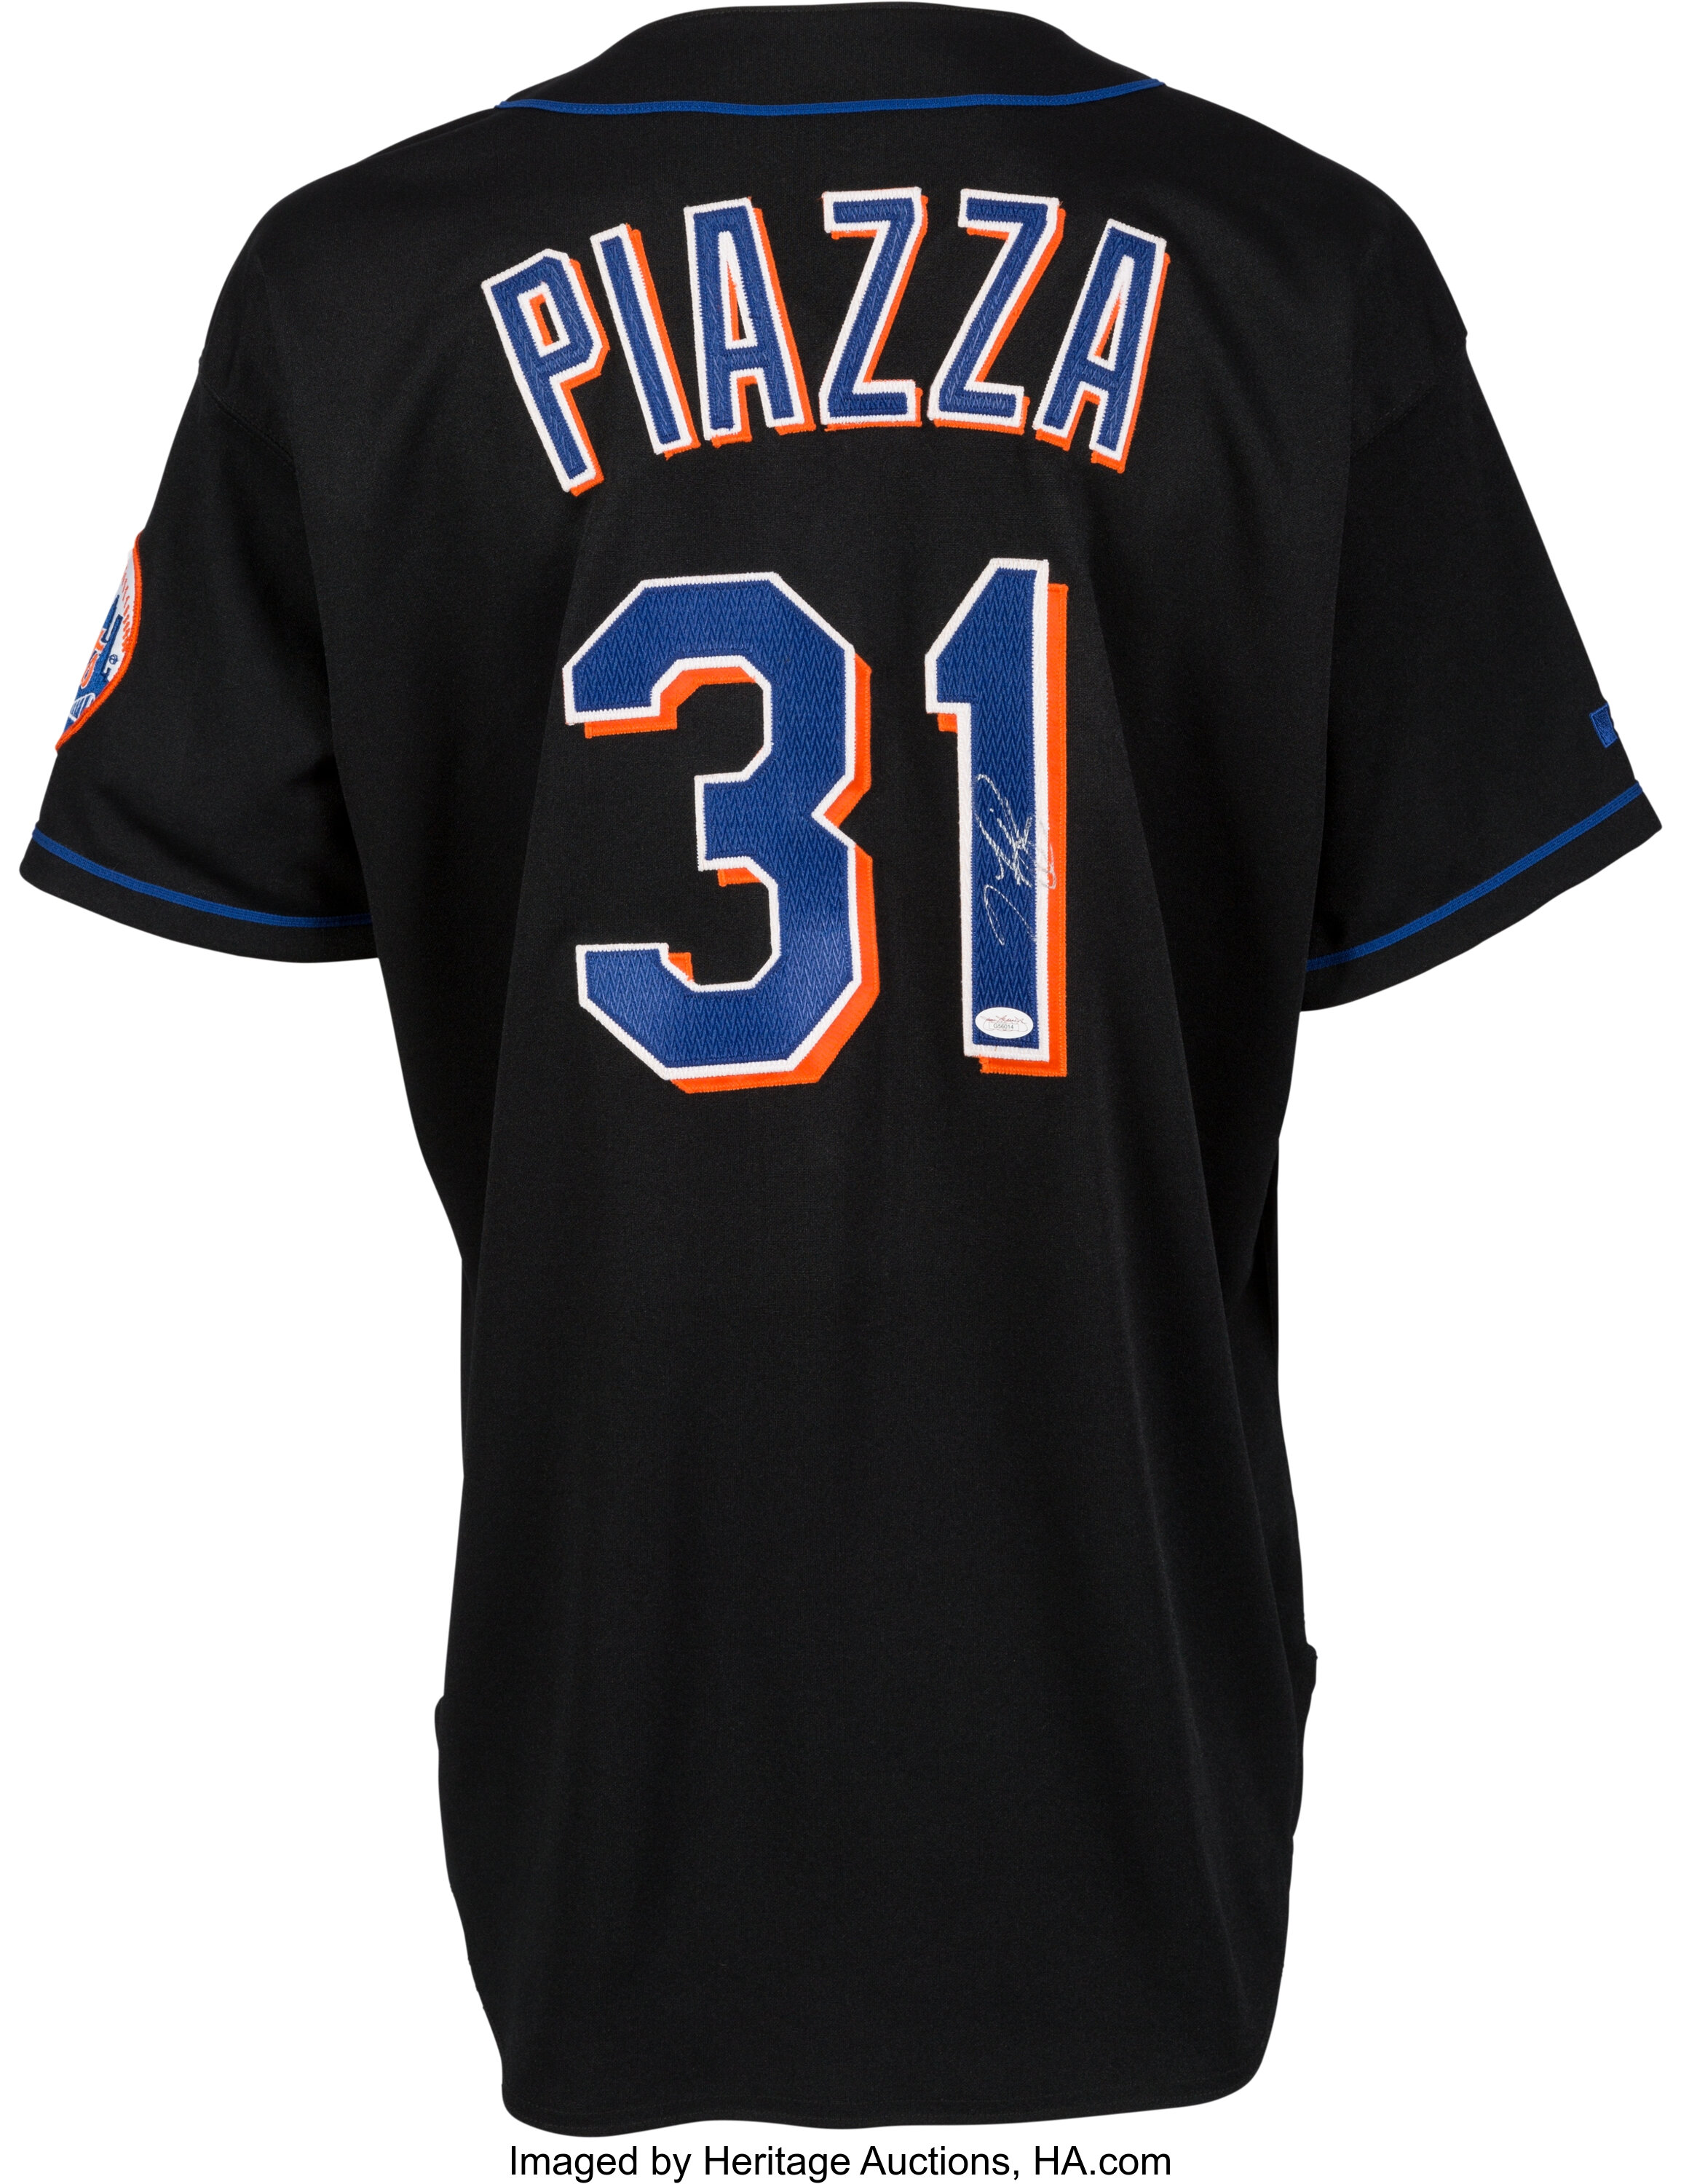 Mets to Wear Piazza Patch Saturday – SportsLogos.Net News